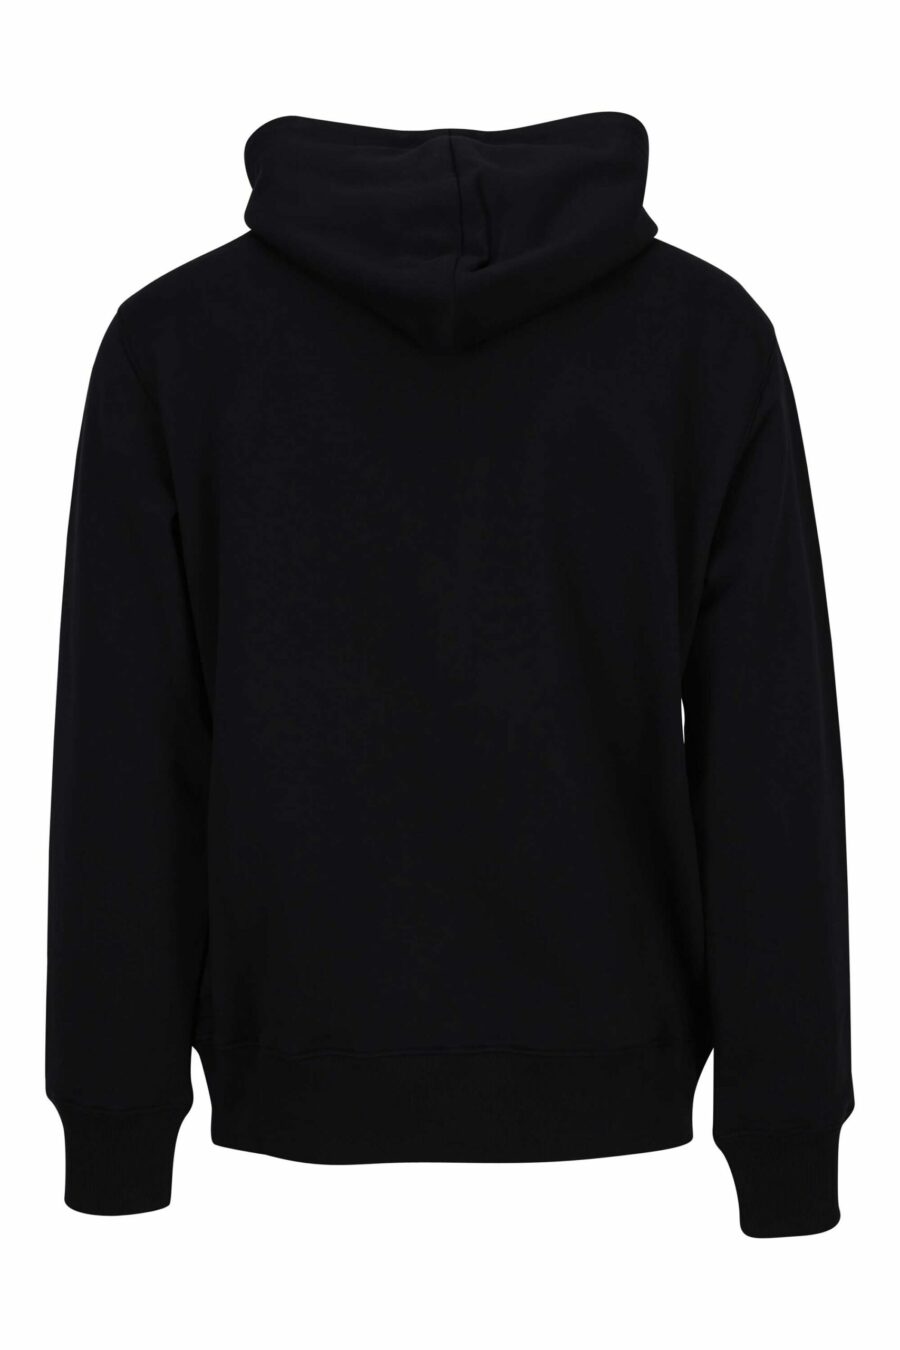 Black sweatshirt with hood and maxilogo bear drawing - 667113768724 1 scaled